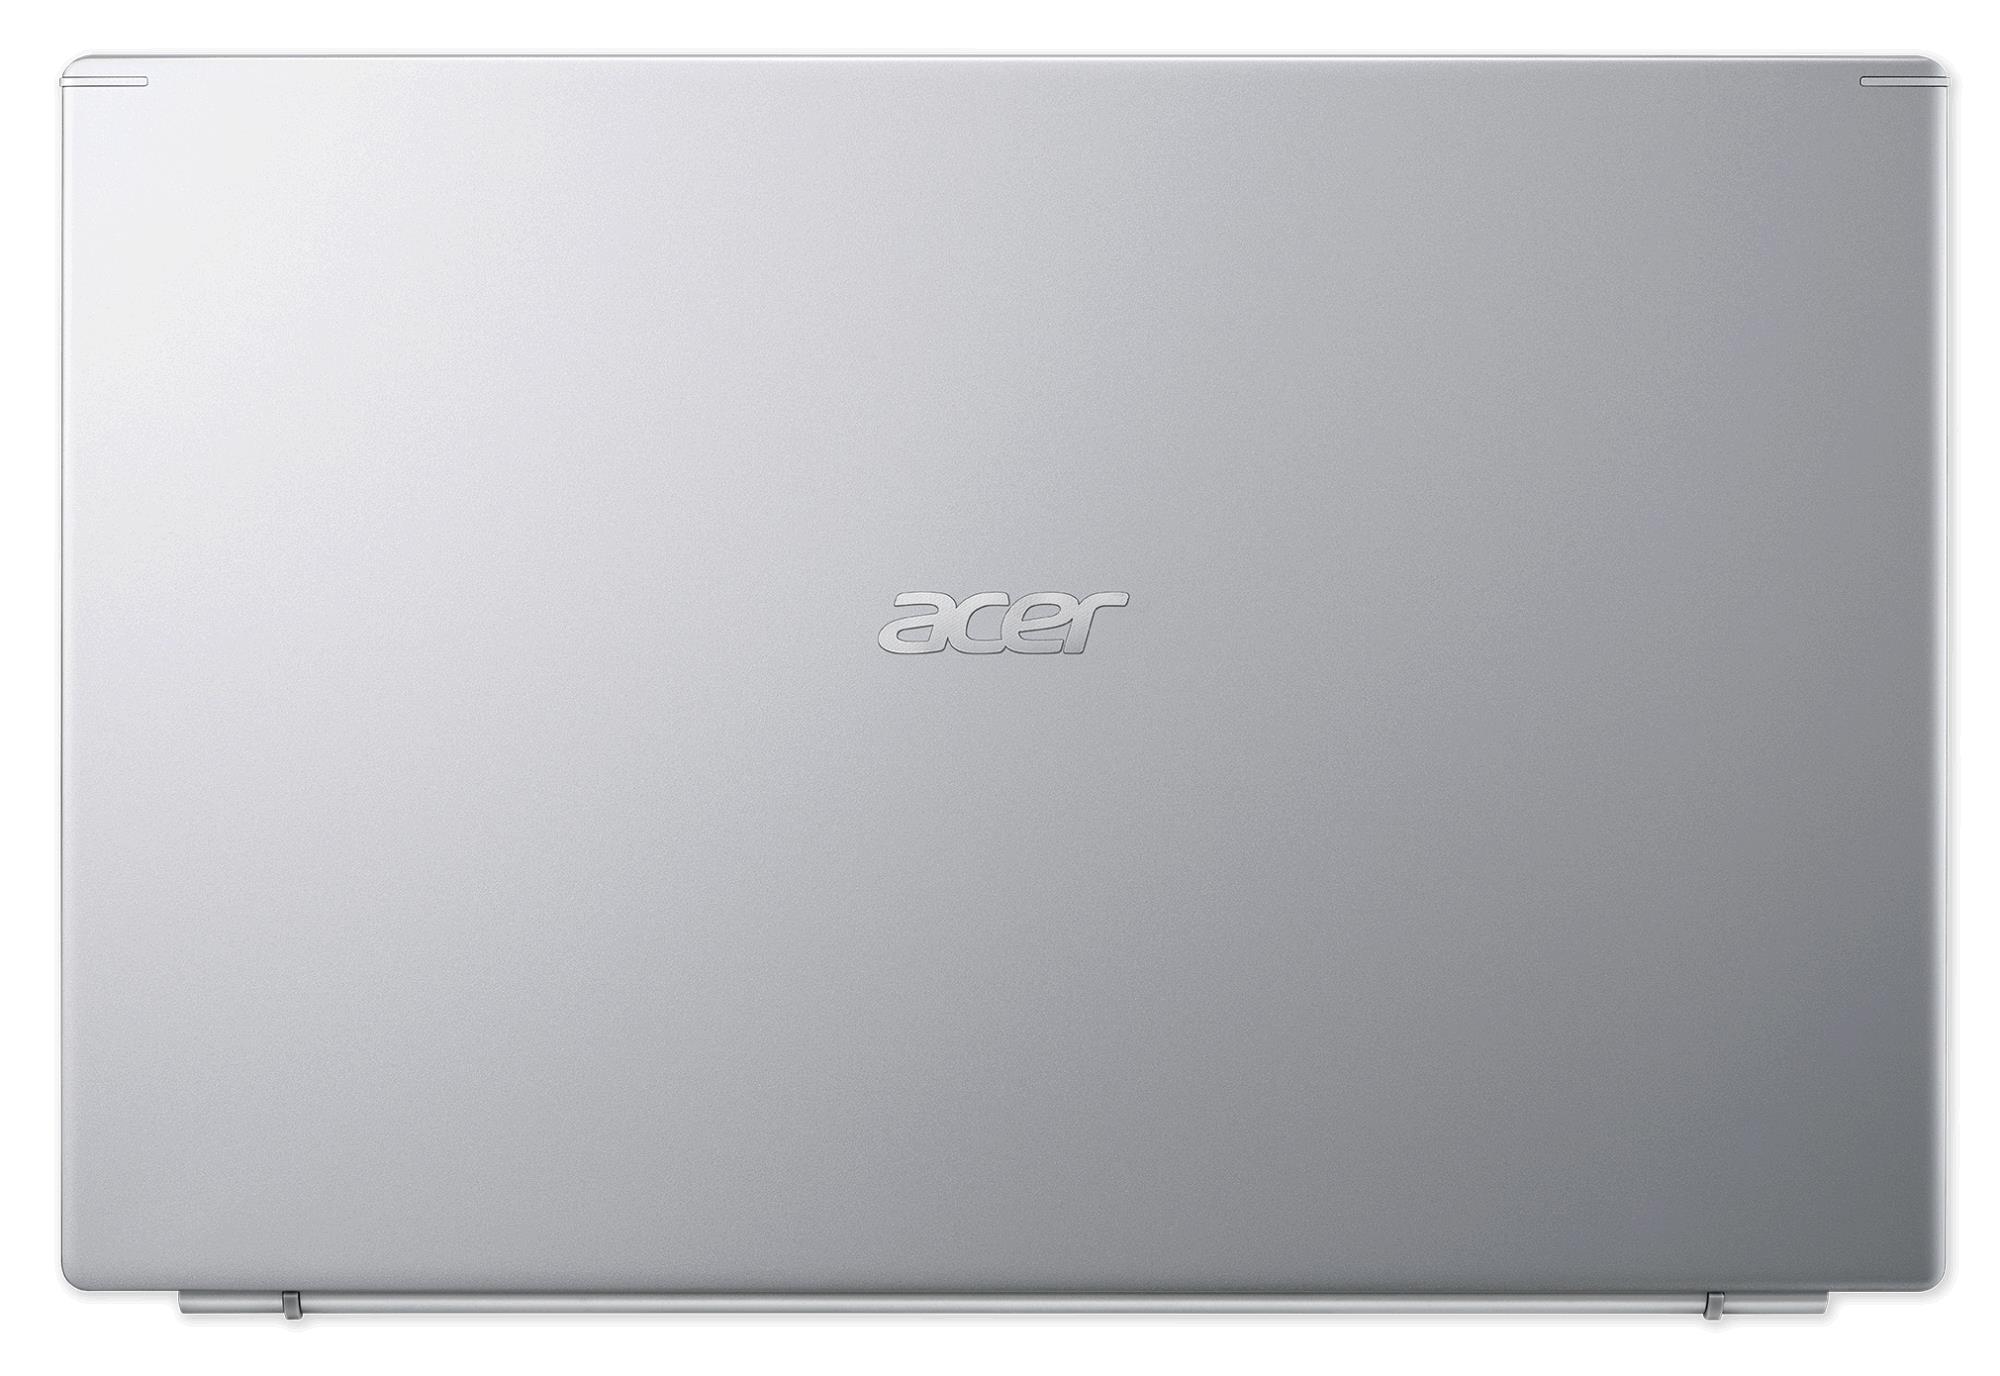 Acer Aspire 5 Pro A517-52G-52W4